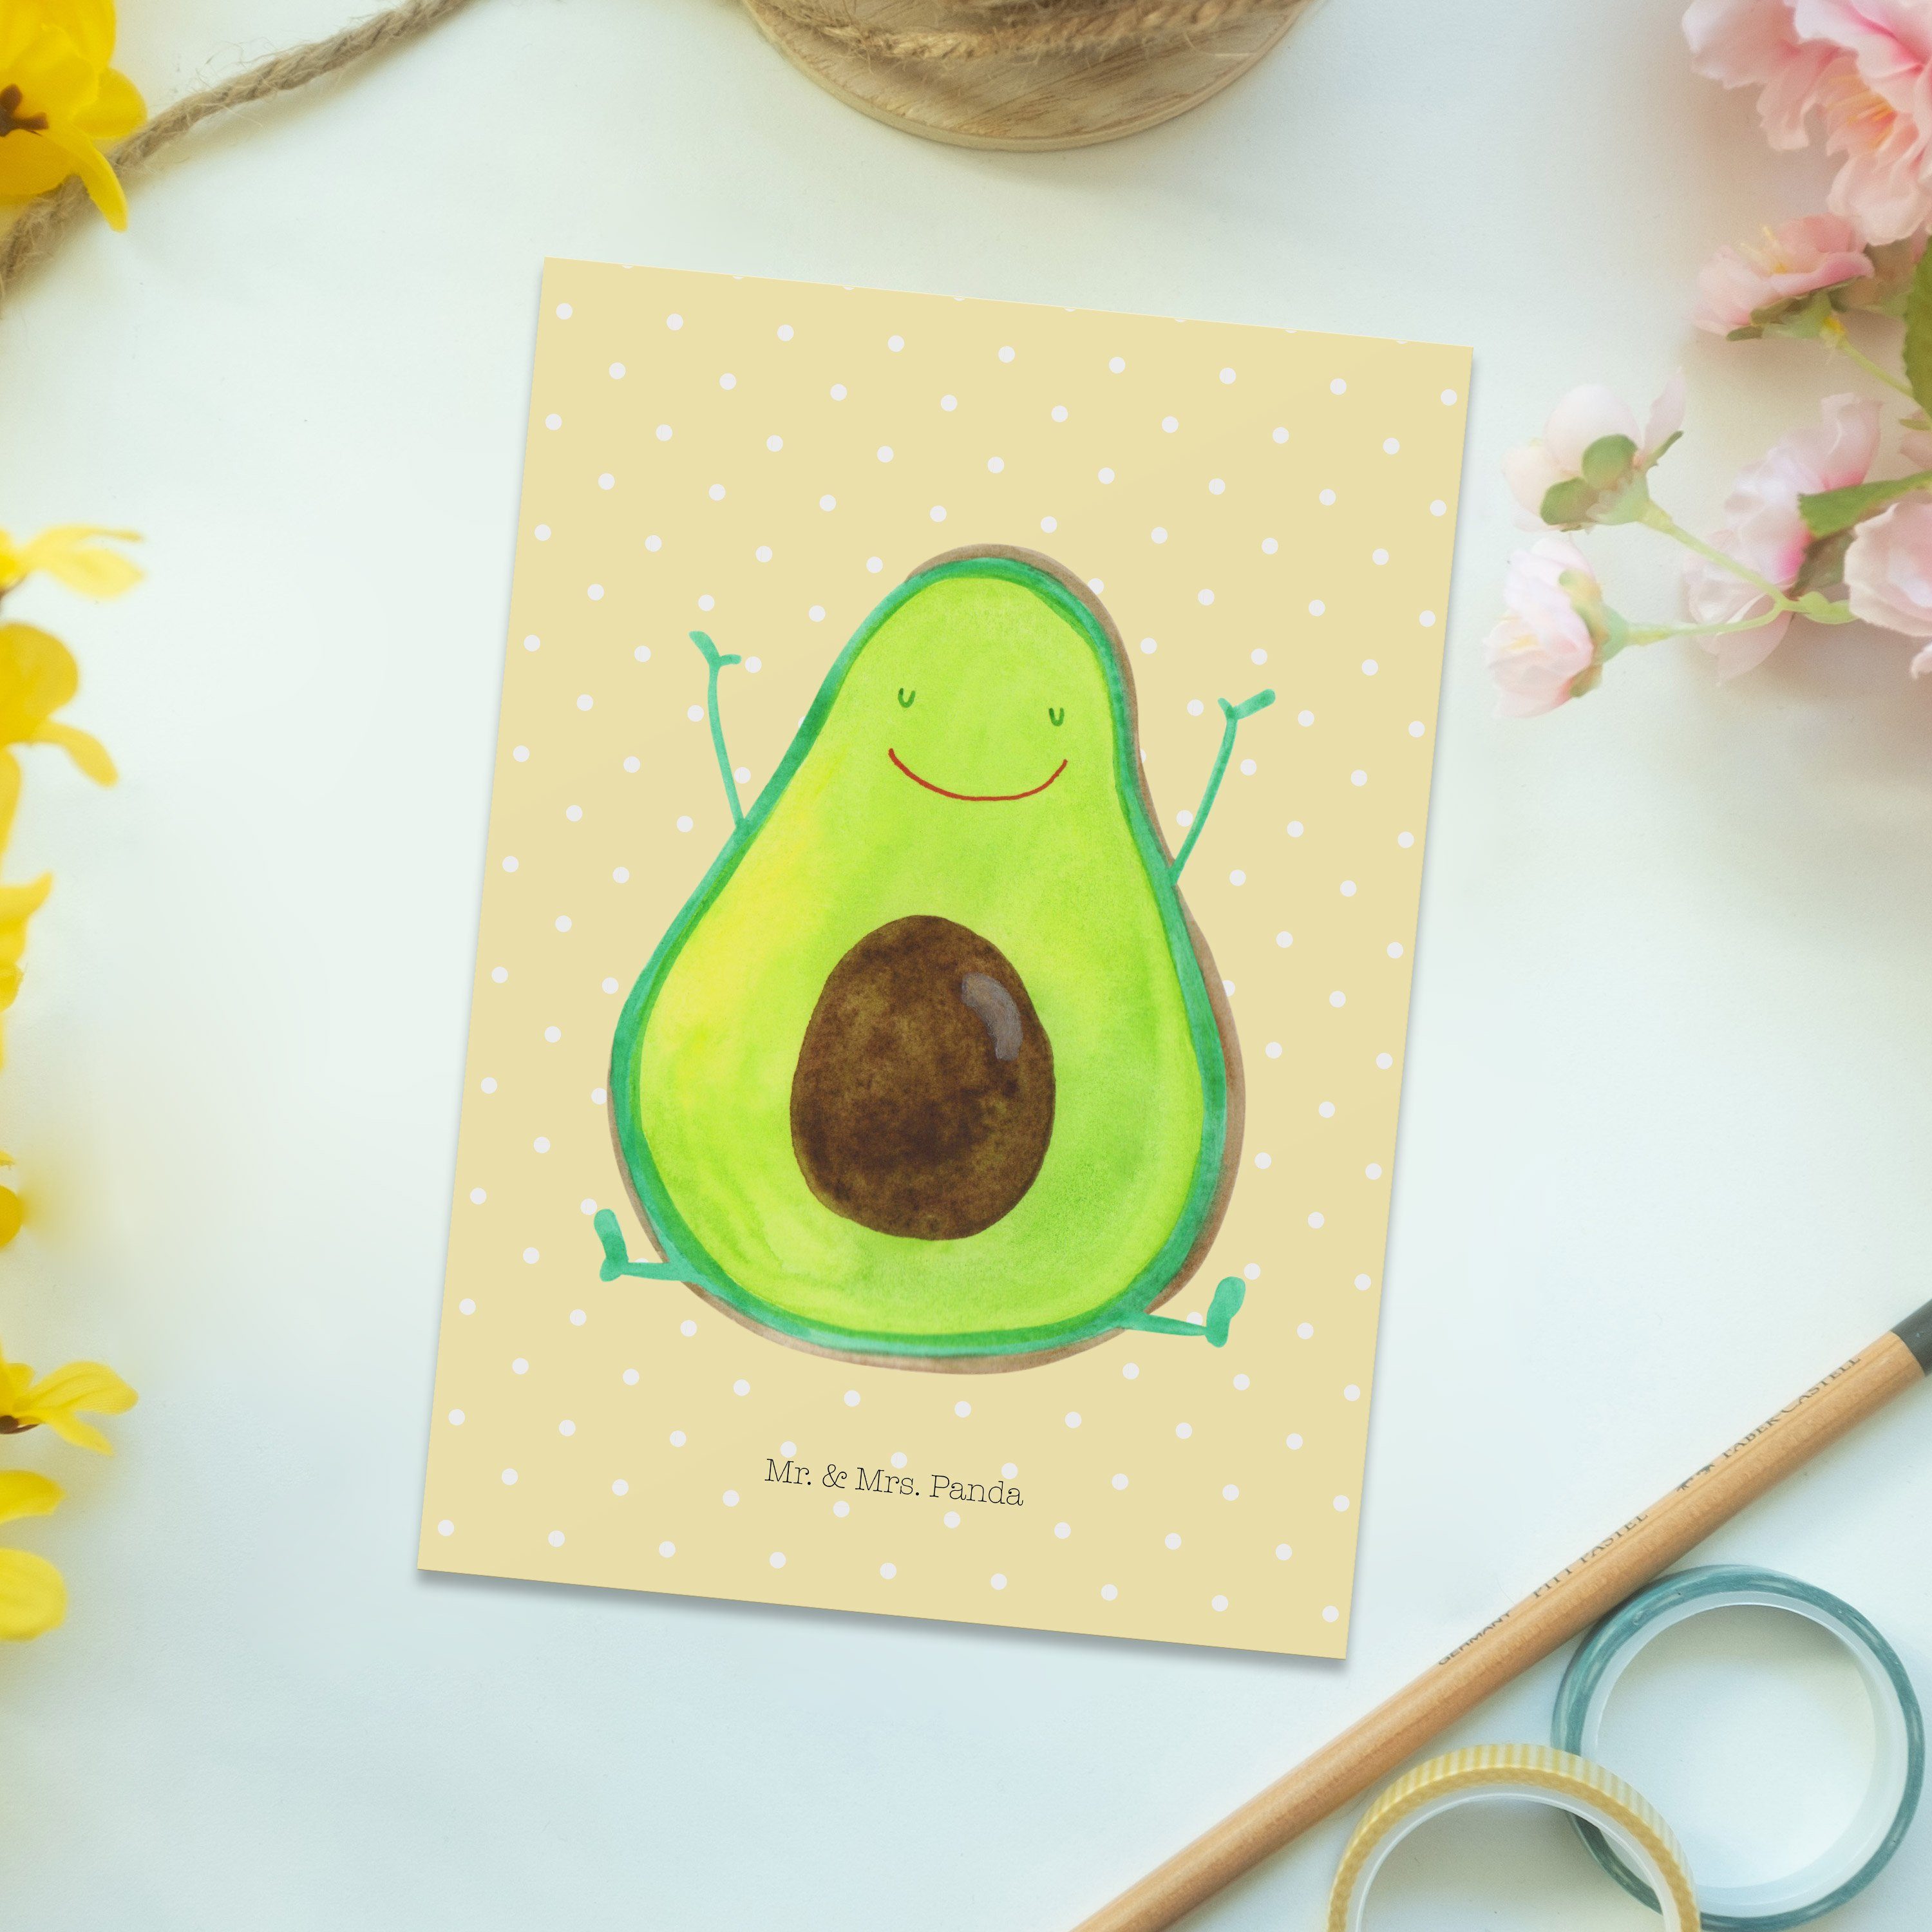 Mr. & Mrs. Pastell Happy Avocado gl Veggie, Postkarte Panda - Geburtstagskarte, Gelb - Geschenk